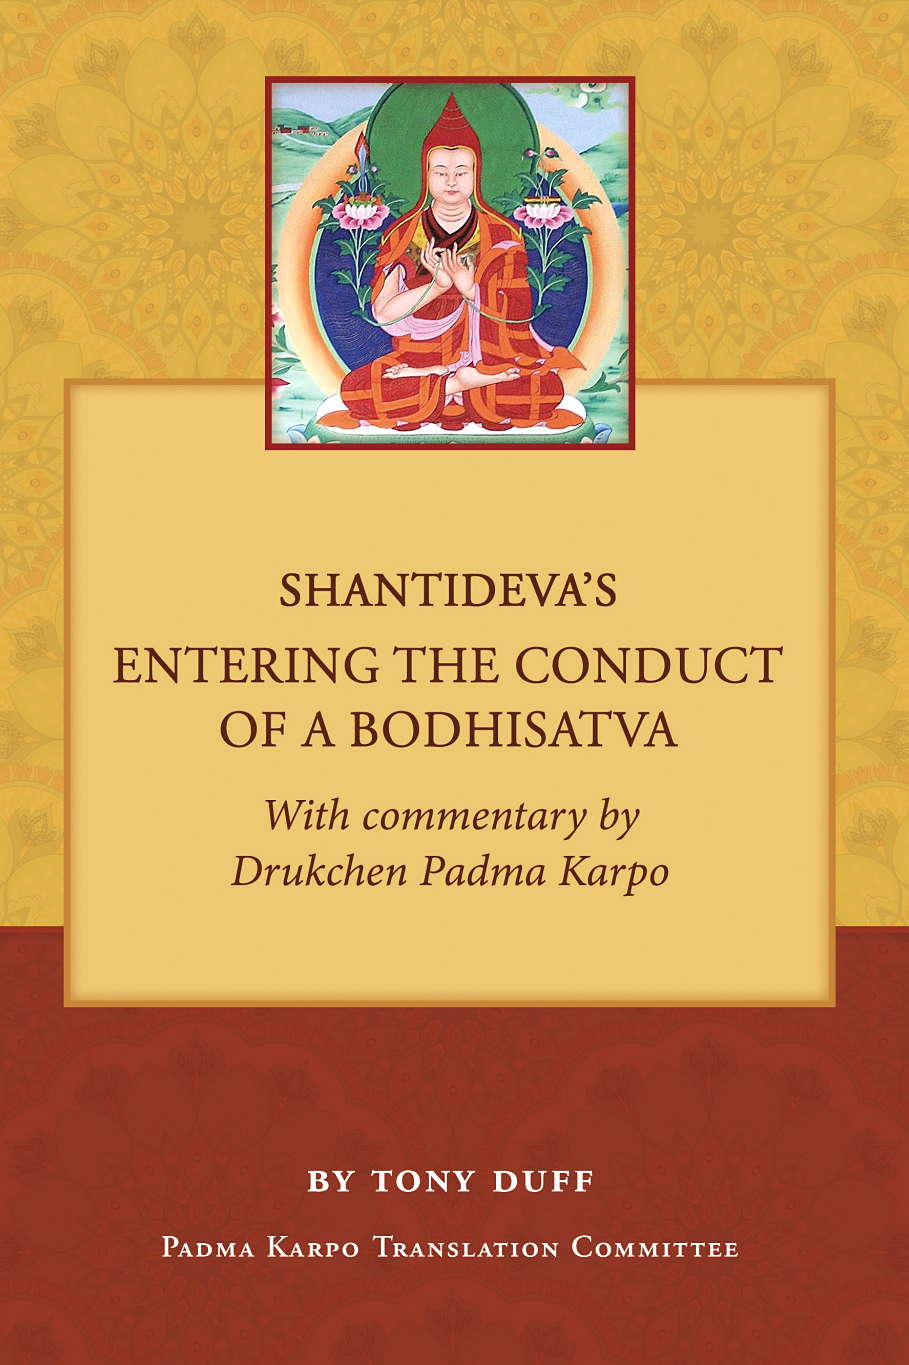 Shantidevas Entering the Path of a Bodhisatva-front.jpg